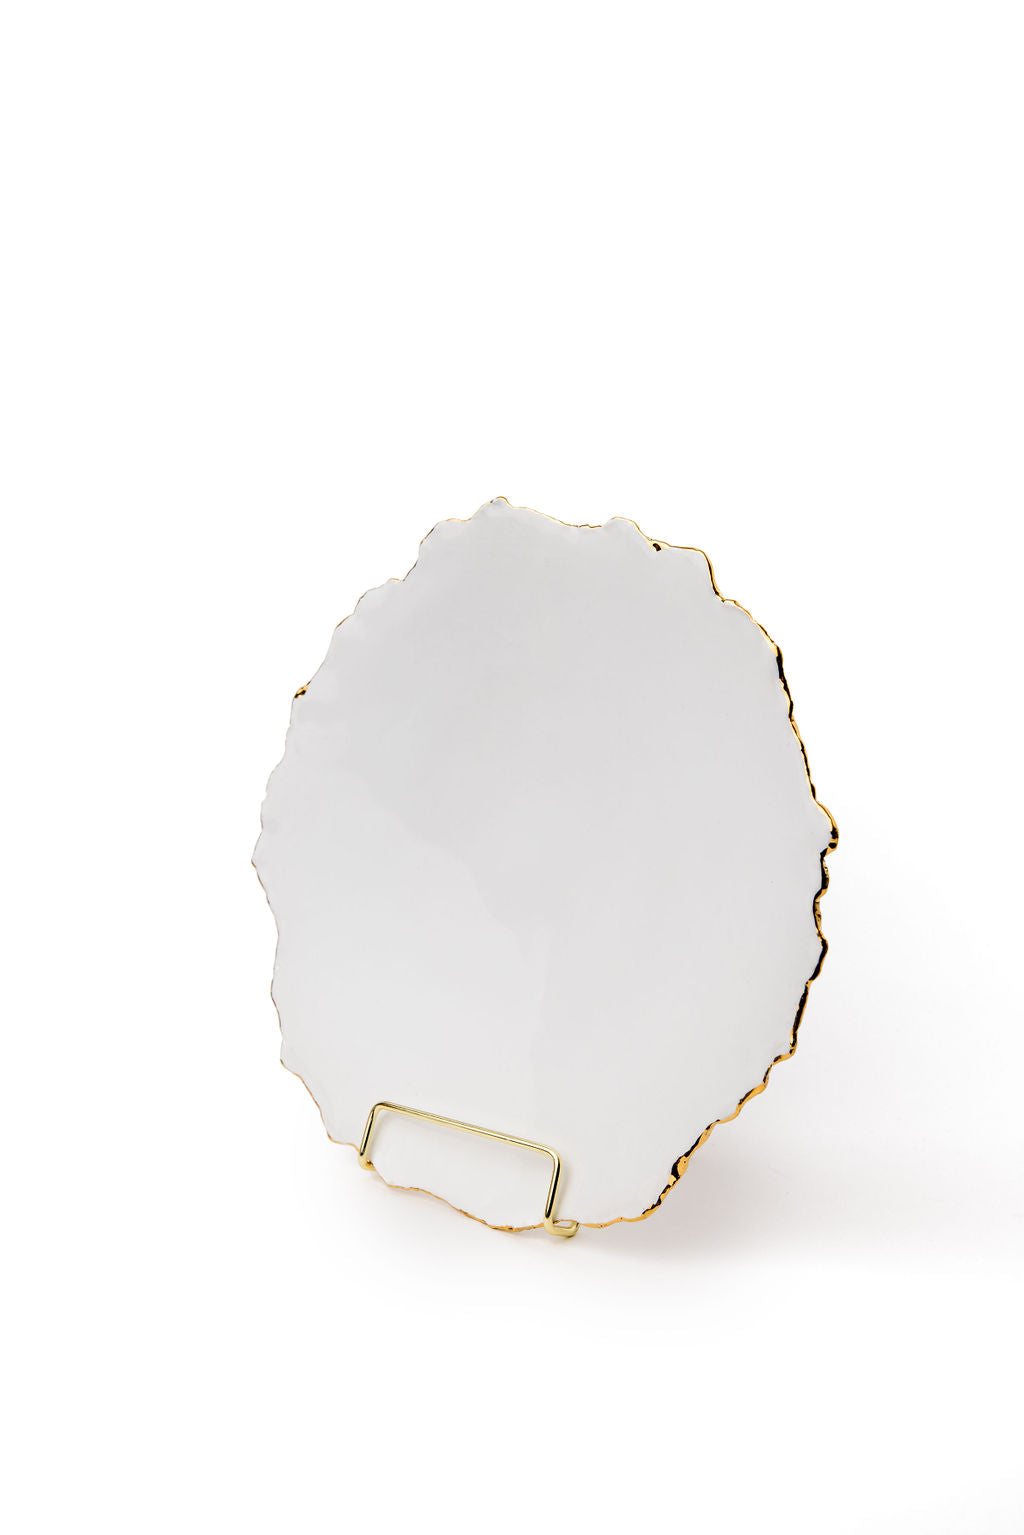 large ceramic plate gold edge white